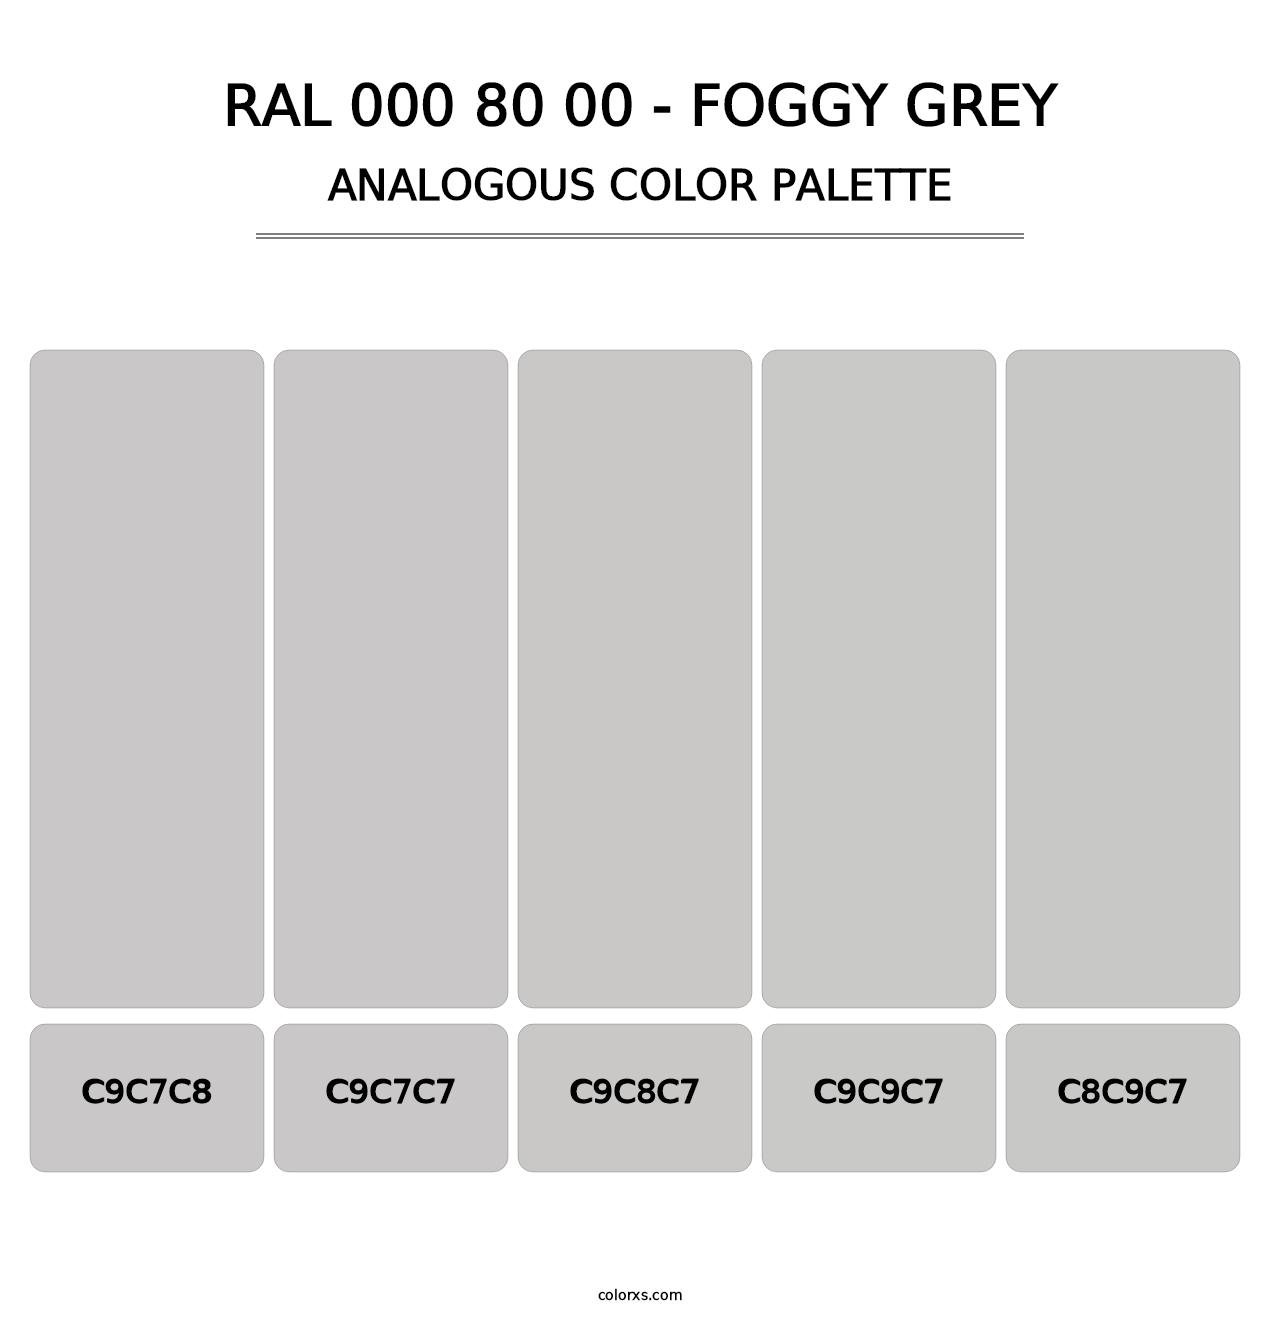 RAL 000 80 00 - Foggy Grey - Analogous Color Palette